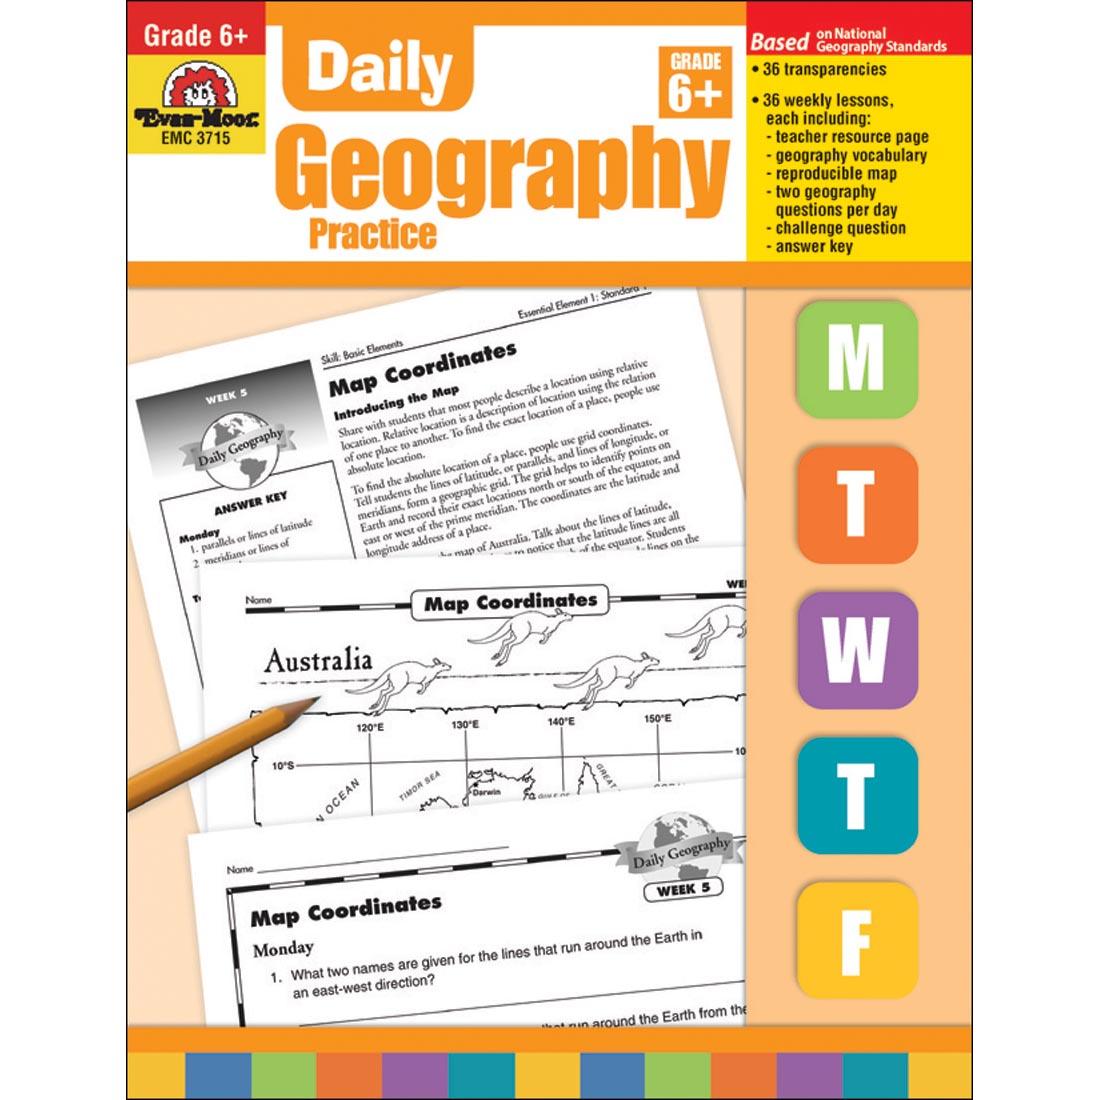 Daily Geography Practice by Evan-Moor Grade 6+